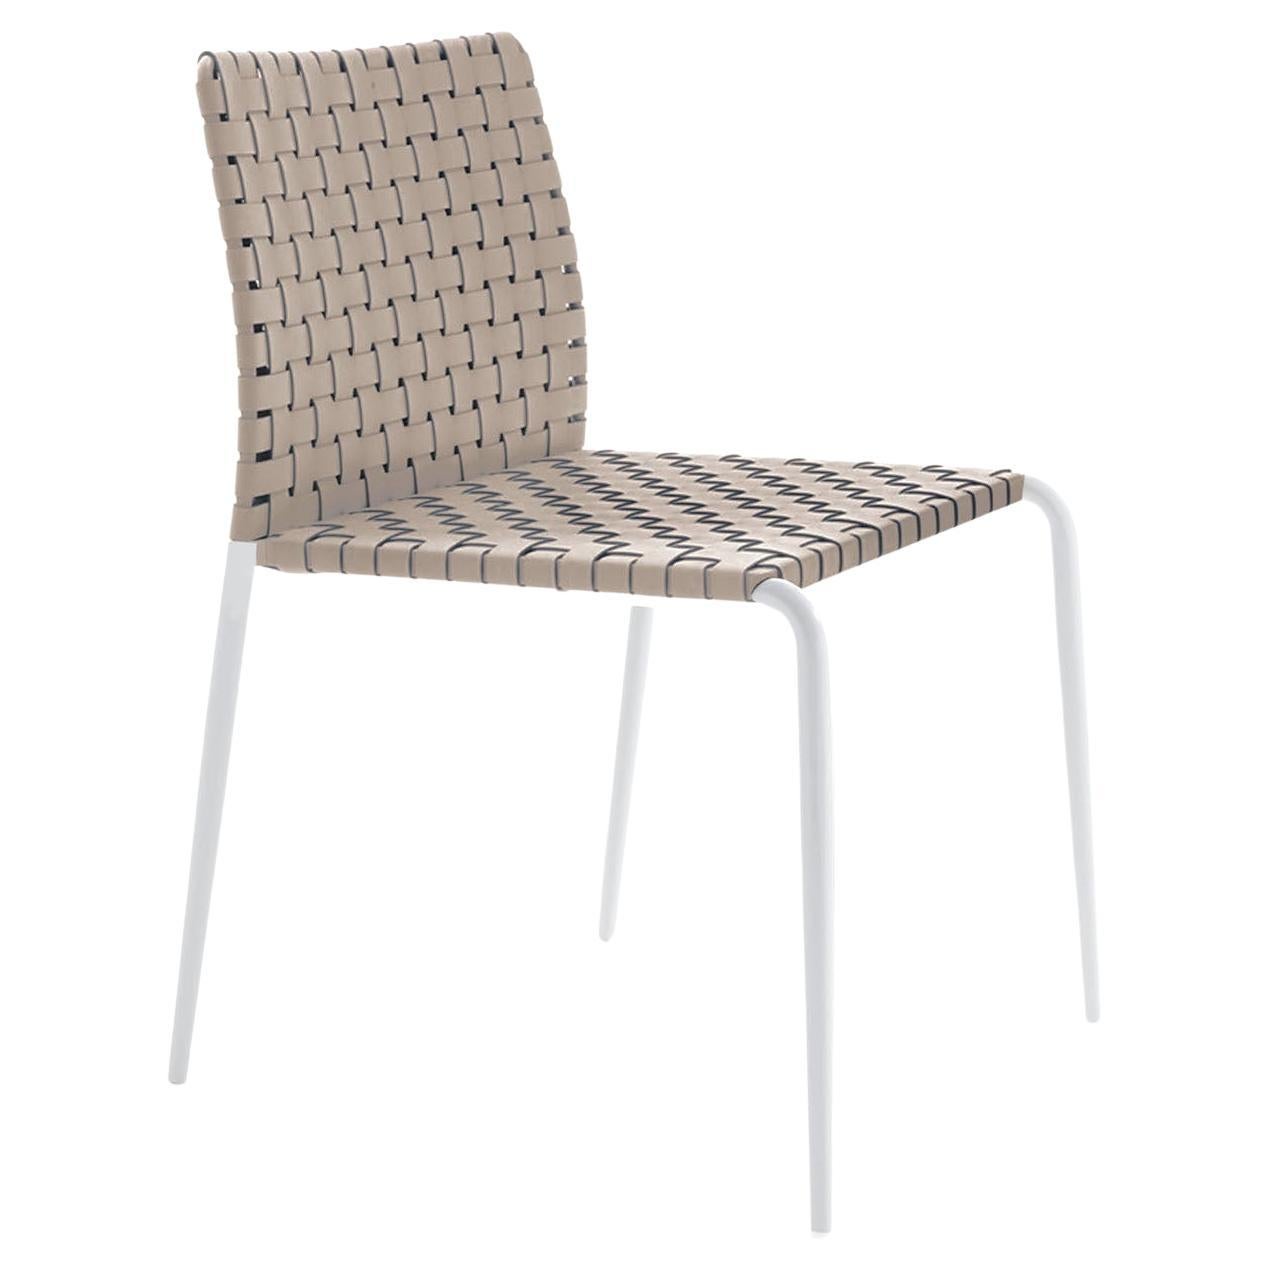 Gazzella Beige Woven Chair For Sale